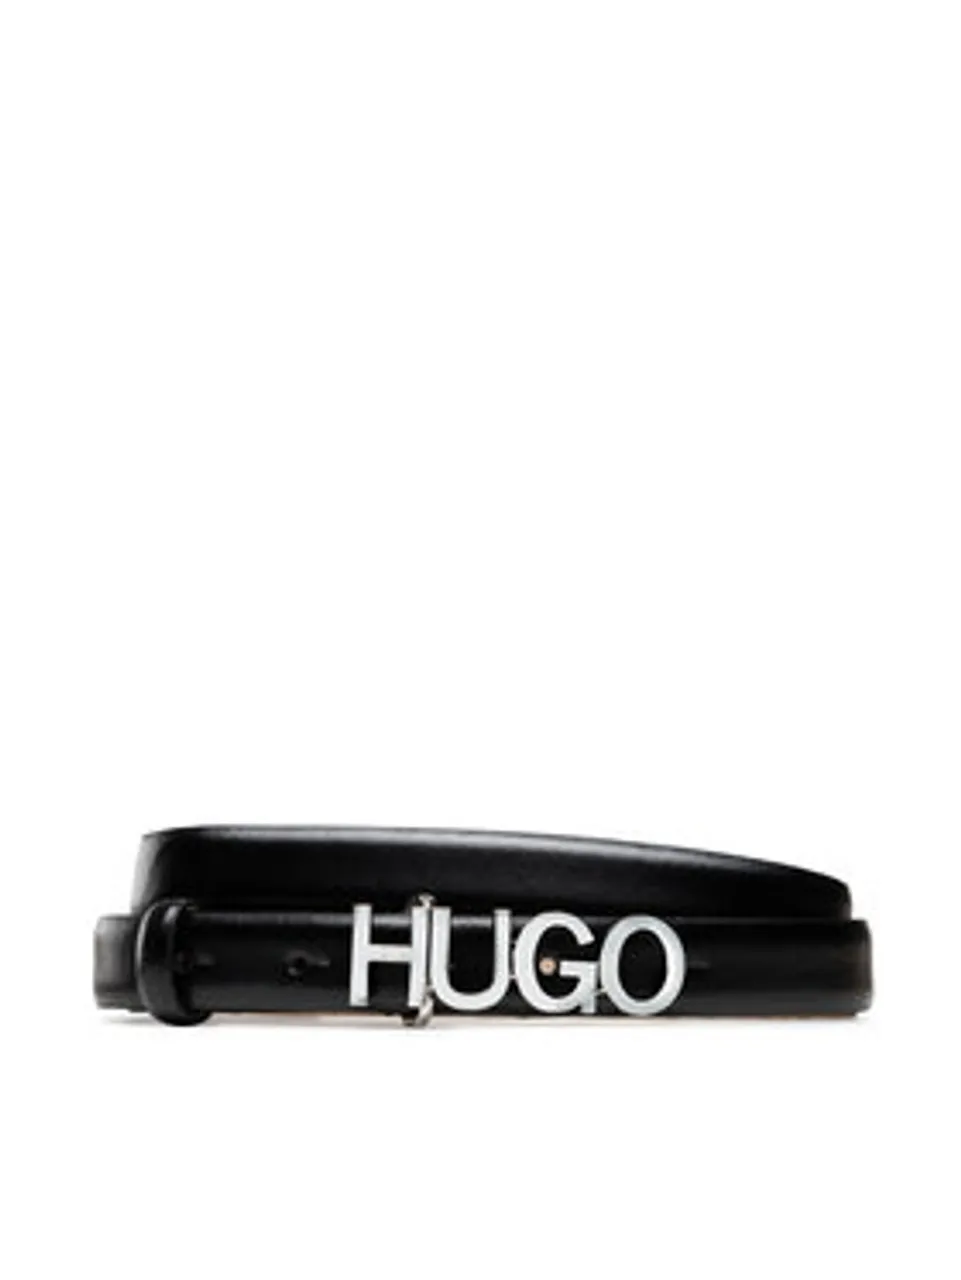 Hugo Boss Damengürtel Hugo Zula 001 2 50441986 vergleichen Preise - Belt